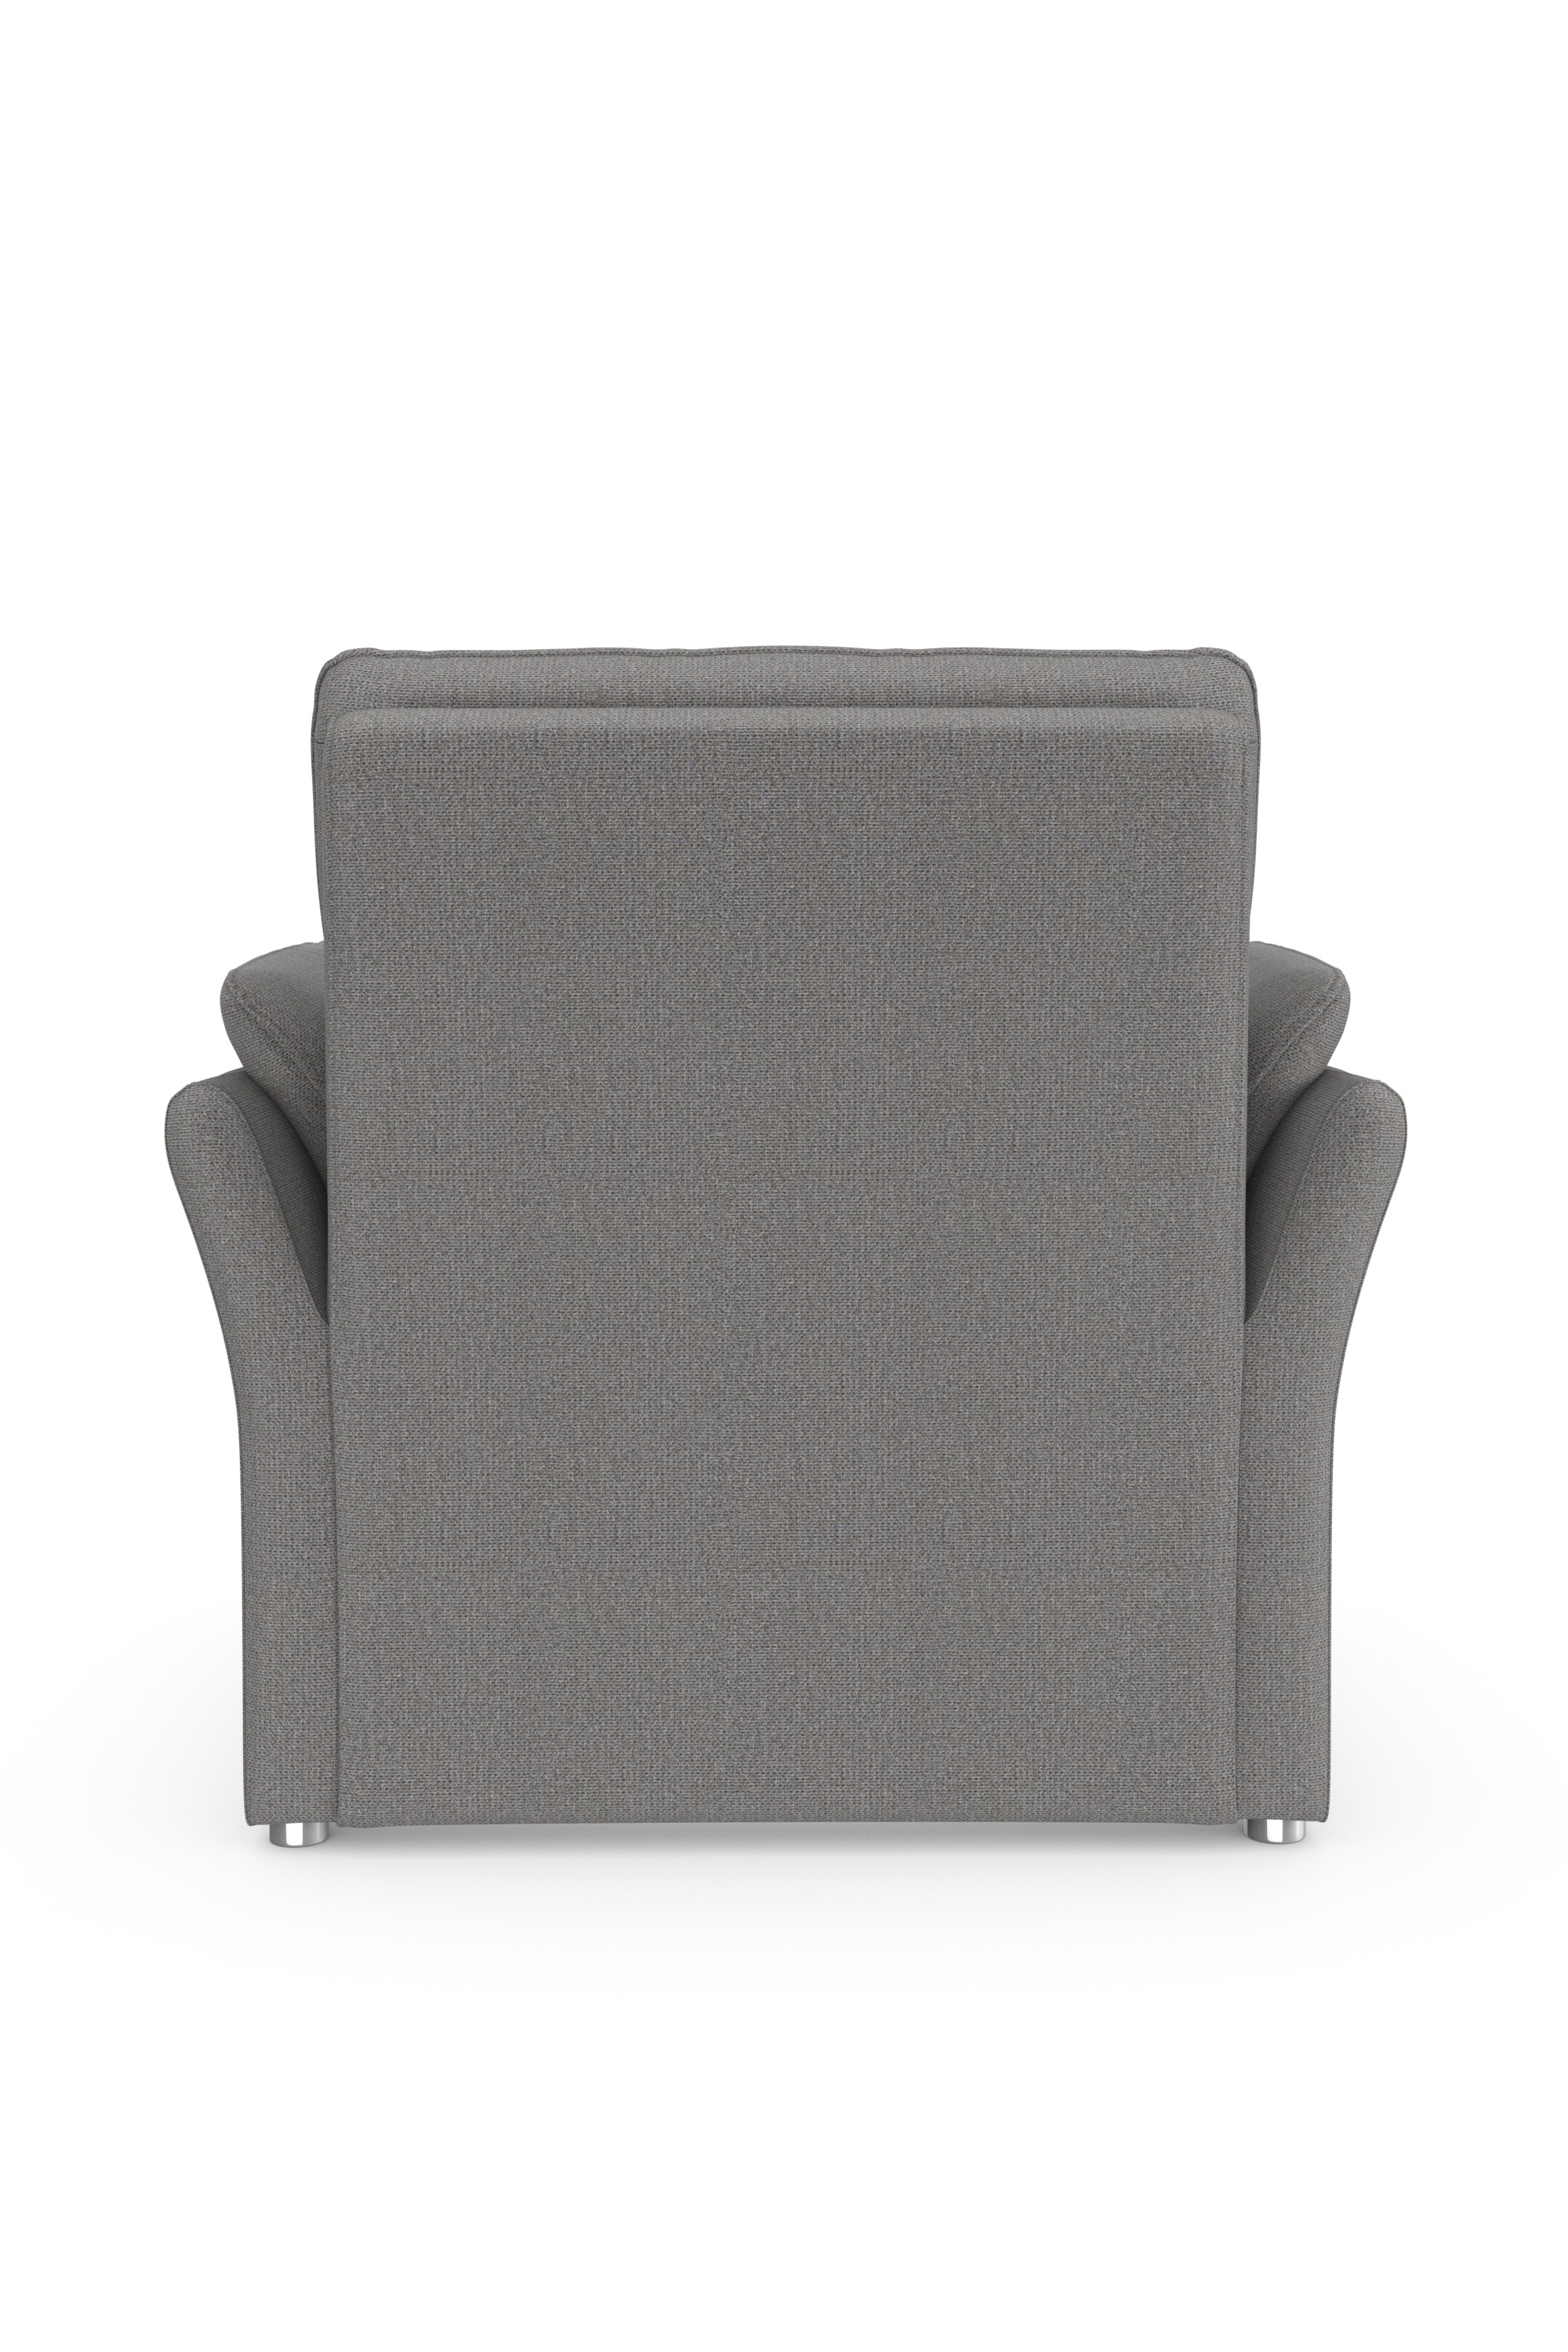 DOMO collection Sessel »Pina«, Passender Sessel zur Serie, mit Federkern